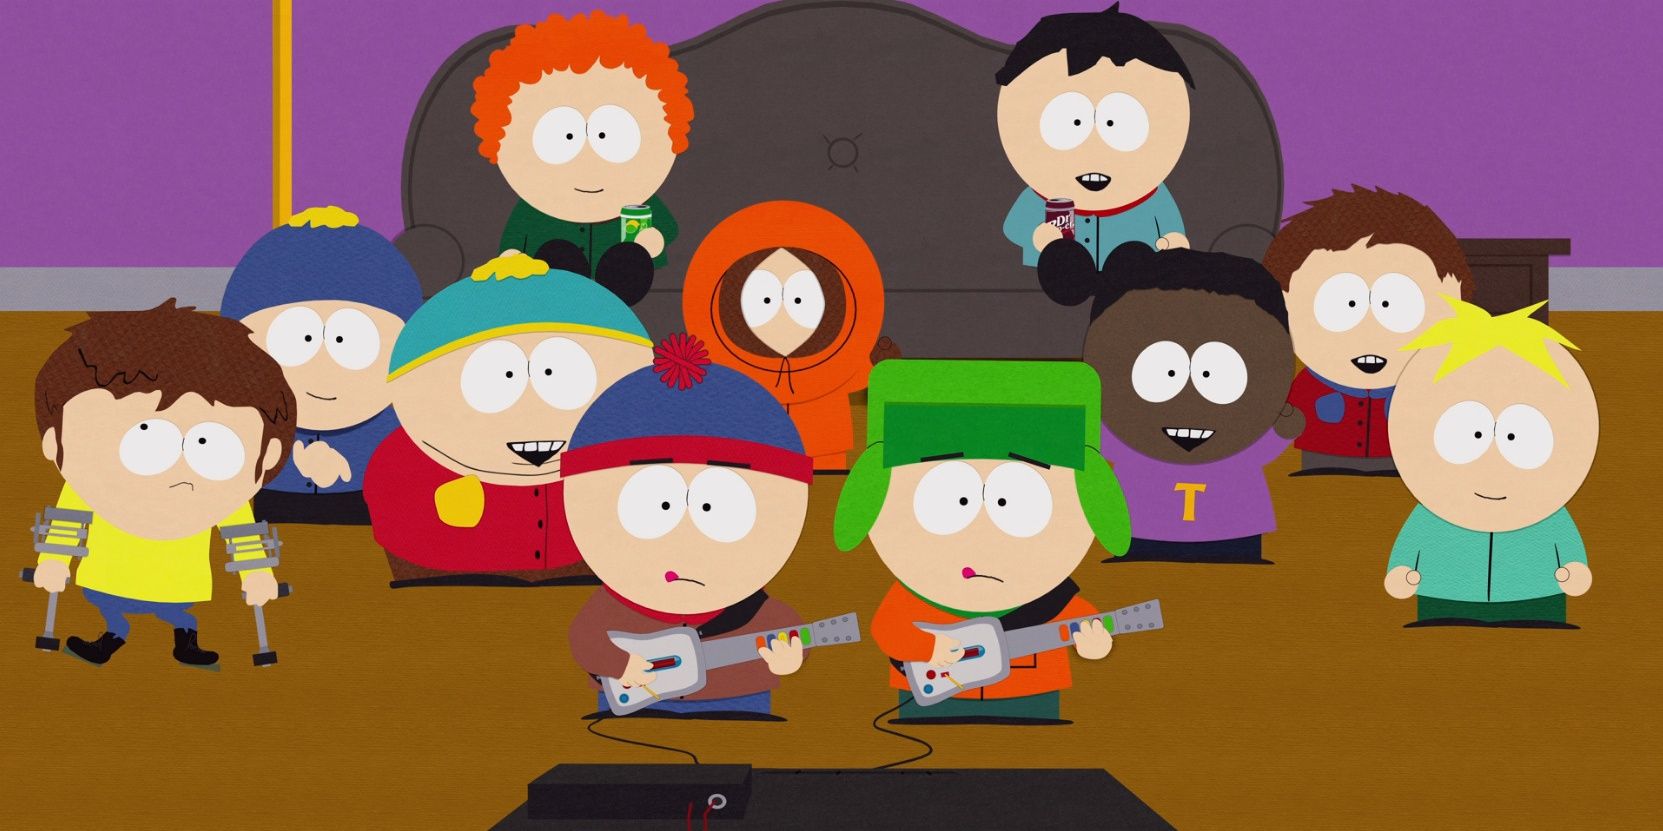 Guitar Queer-O, a South Park episode